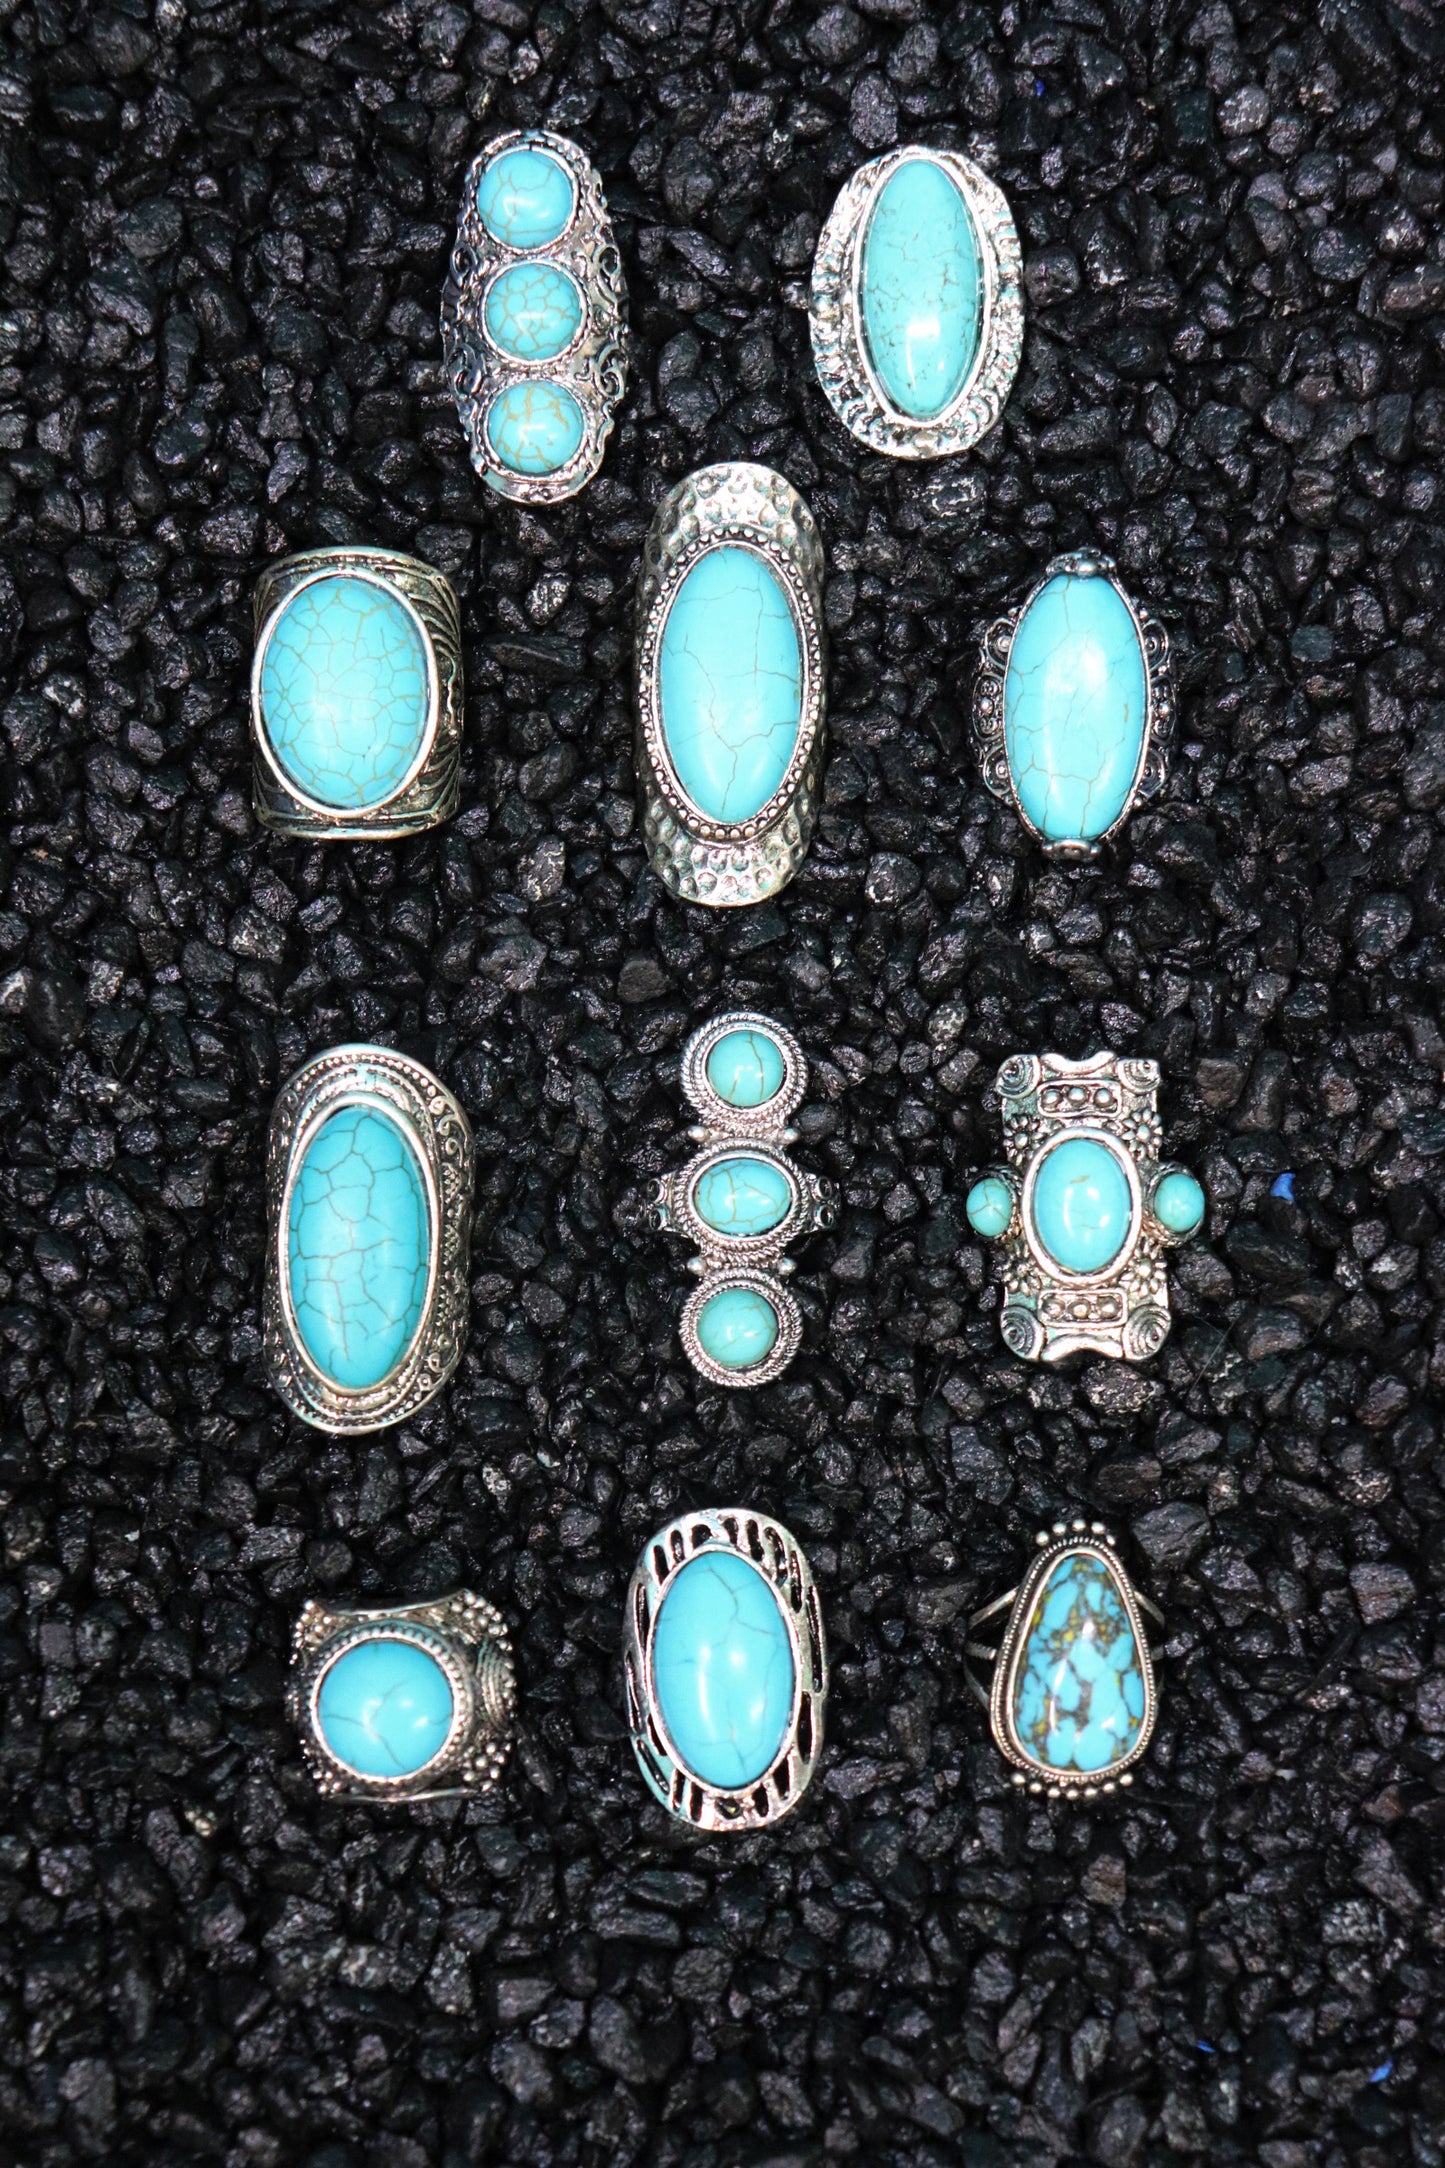 Turquoise Bling Rings